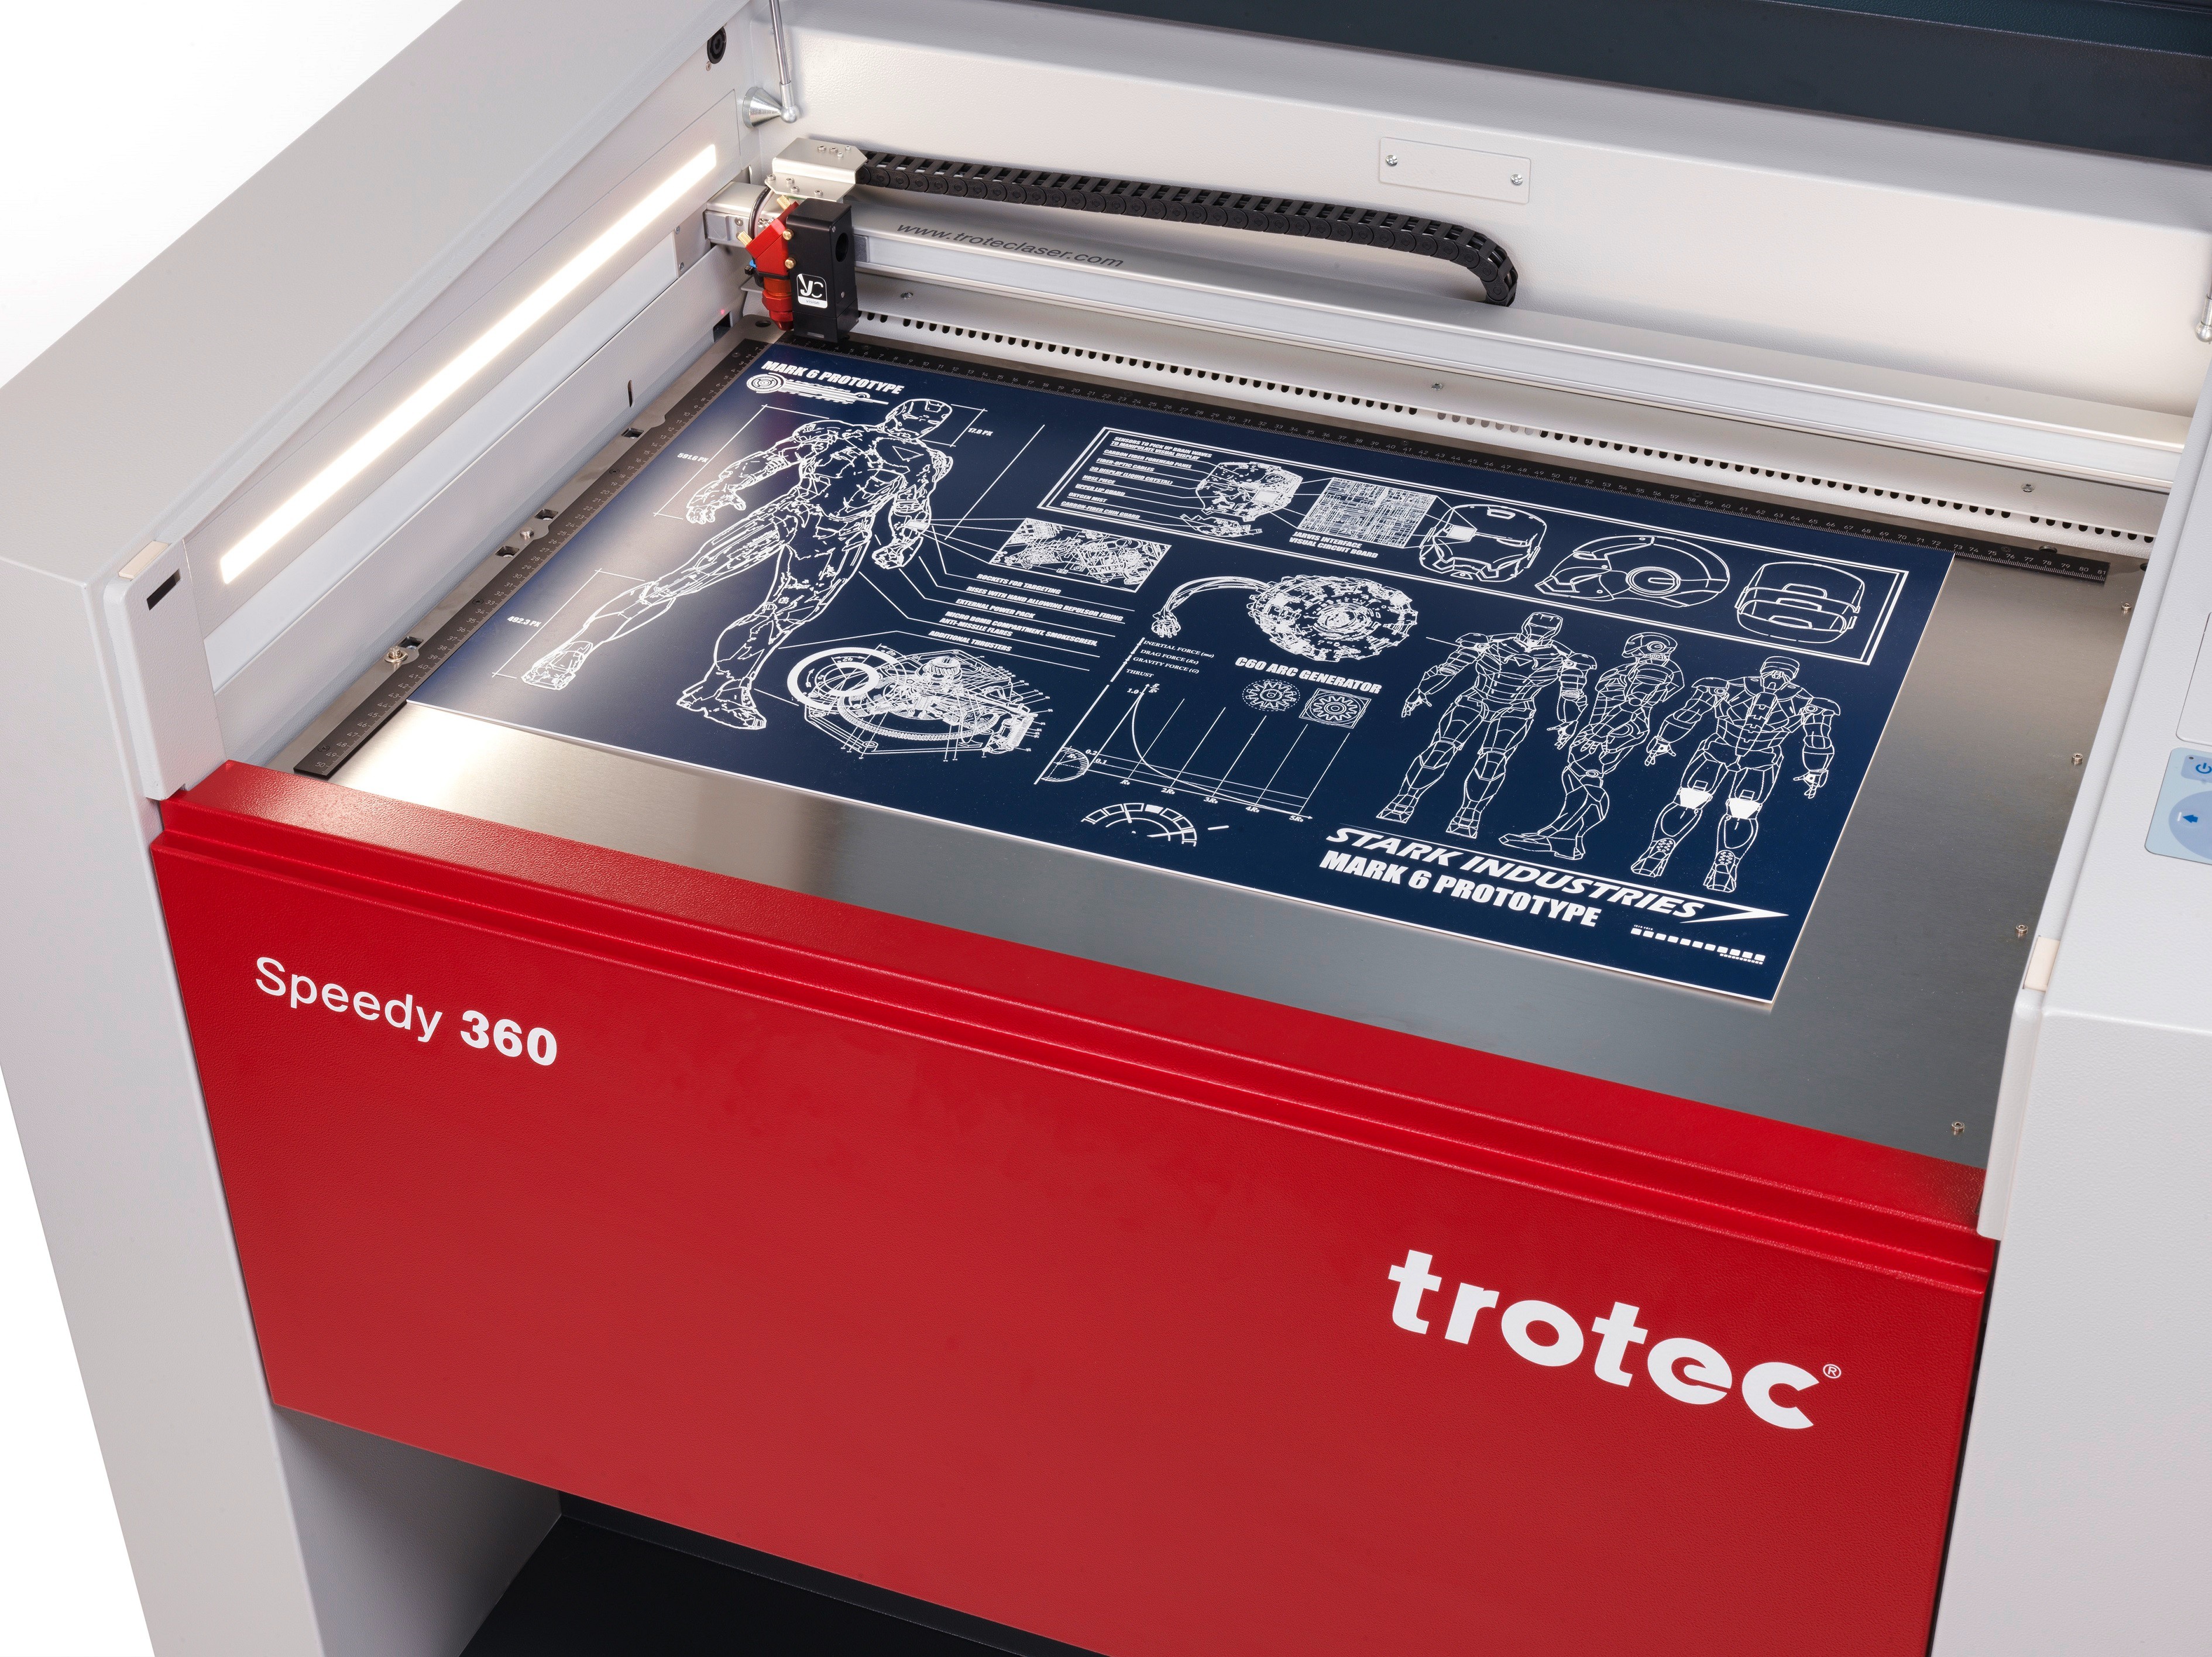 Trotec Presents A New Laser Engraver: The Speedy 360 | PECM